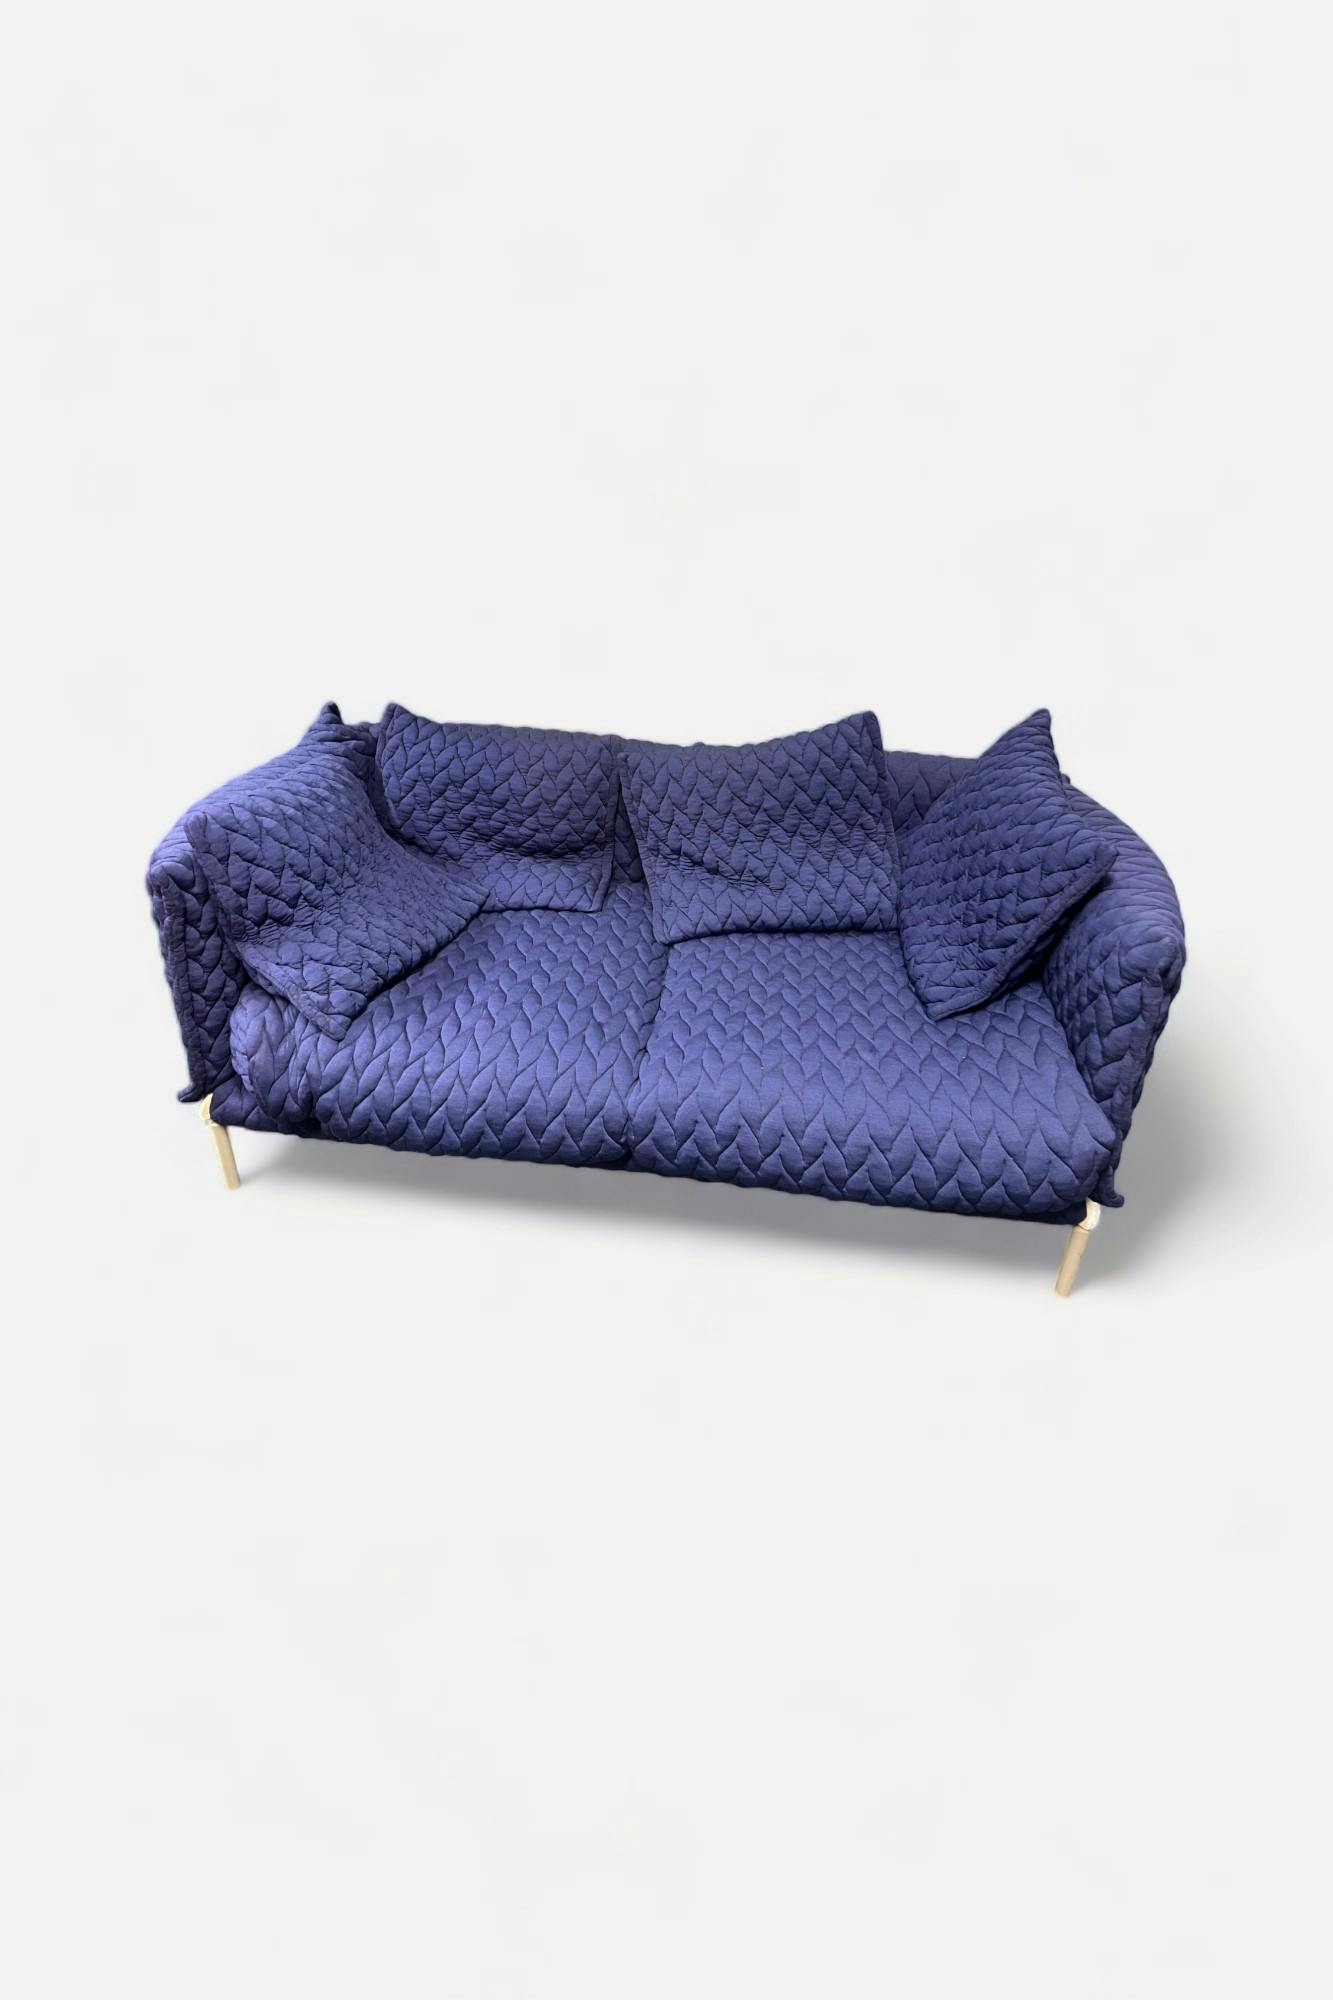 MOROSO Ontwerp Sofa Gentry Patricia Urquiola - Relieve Furniture